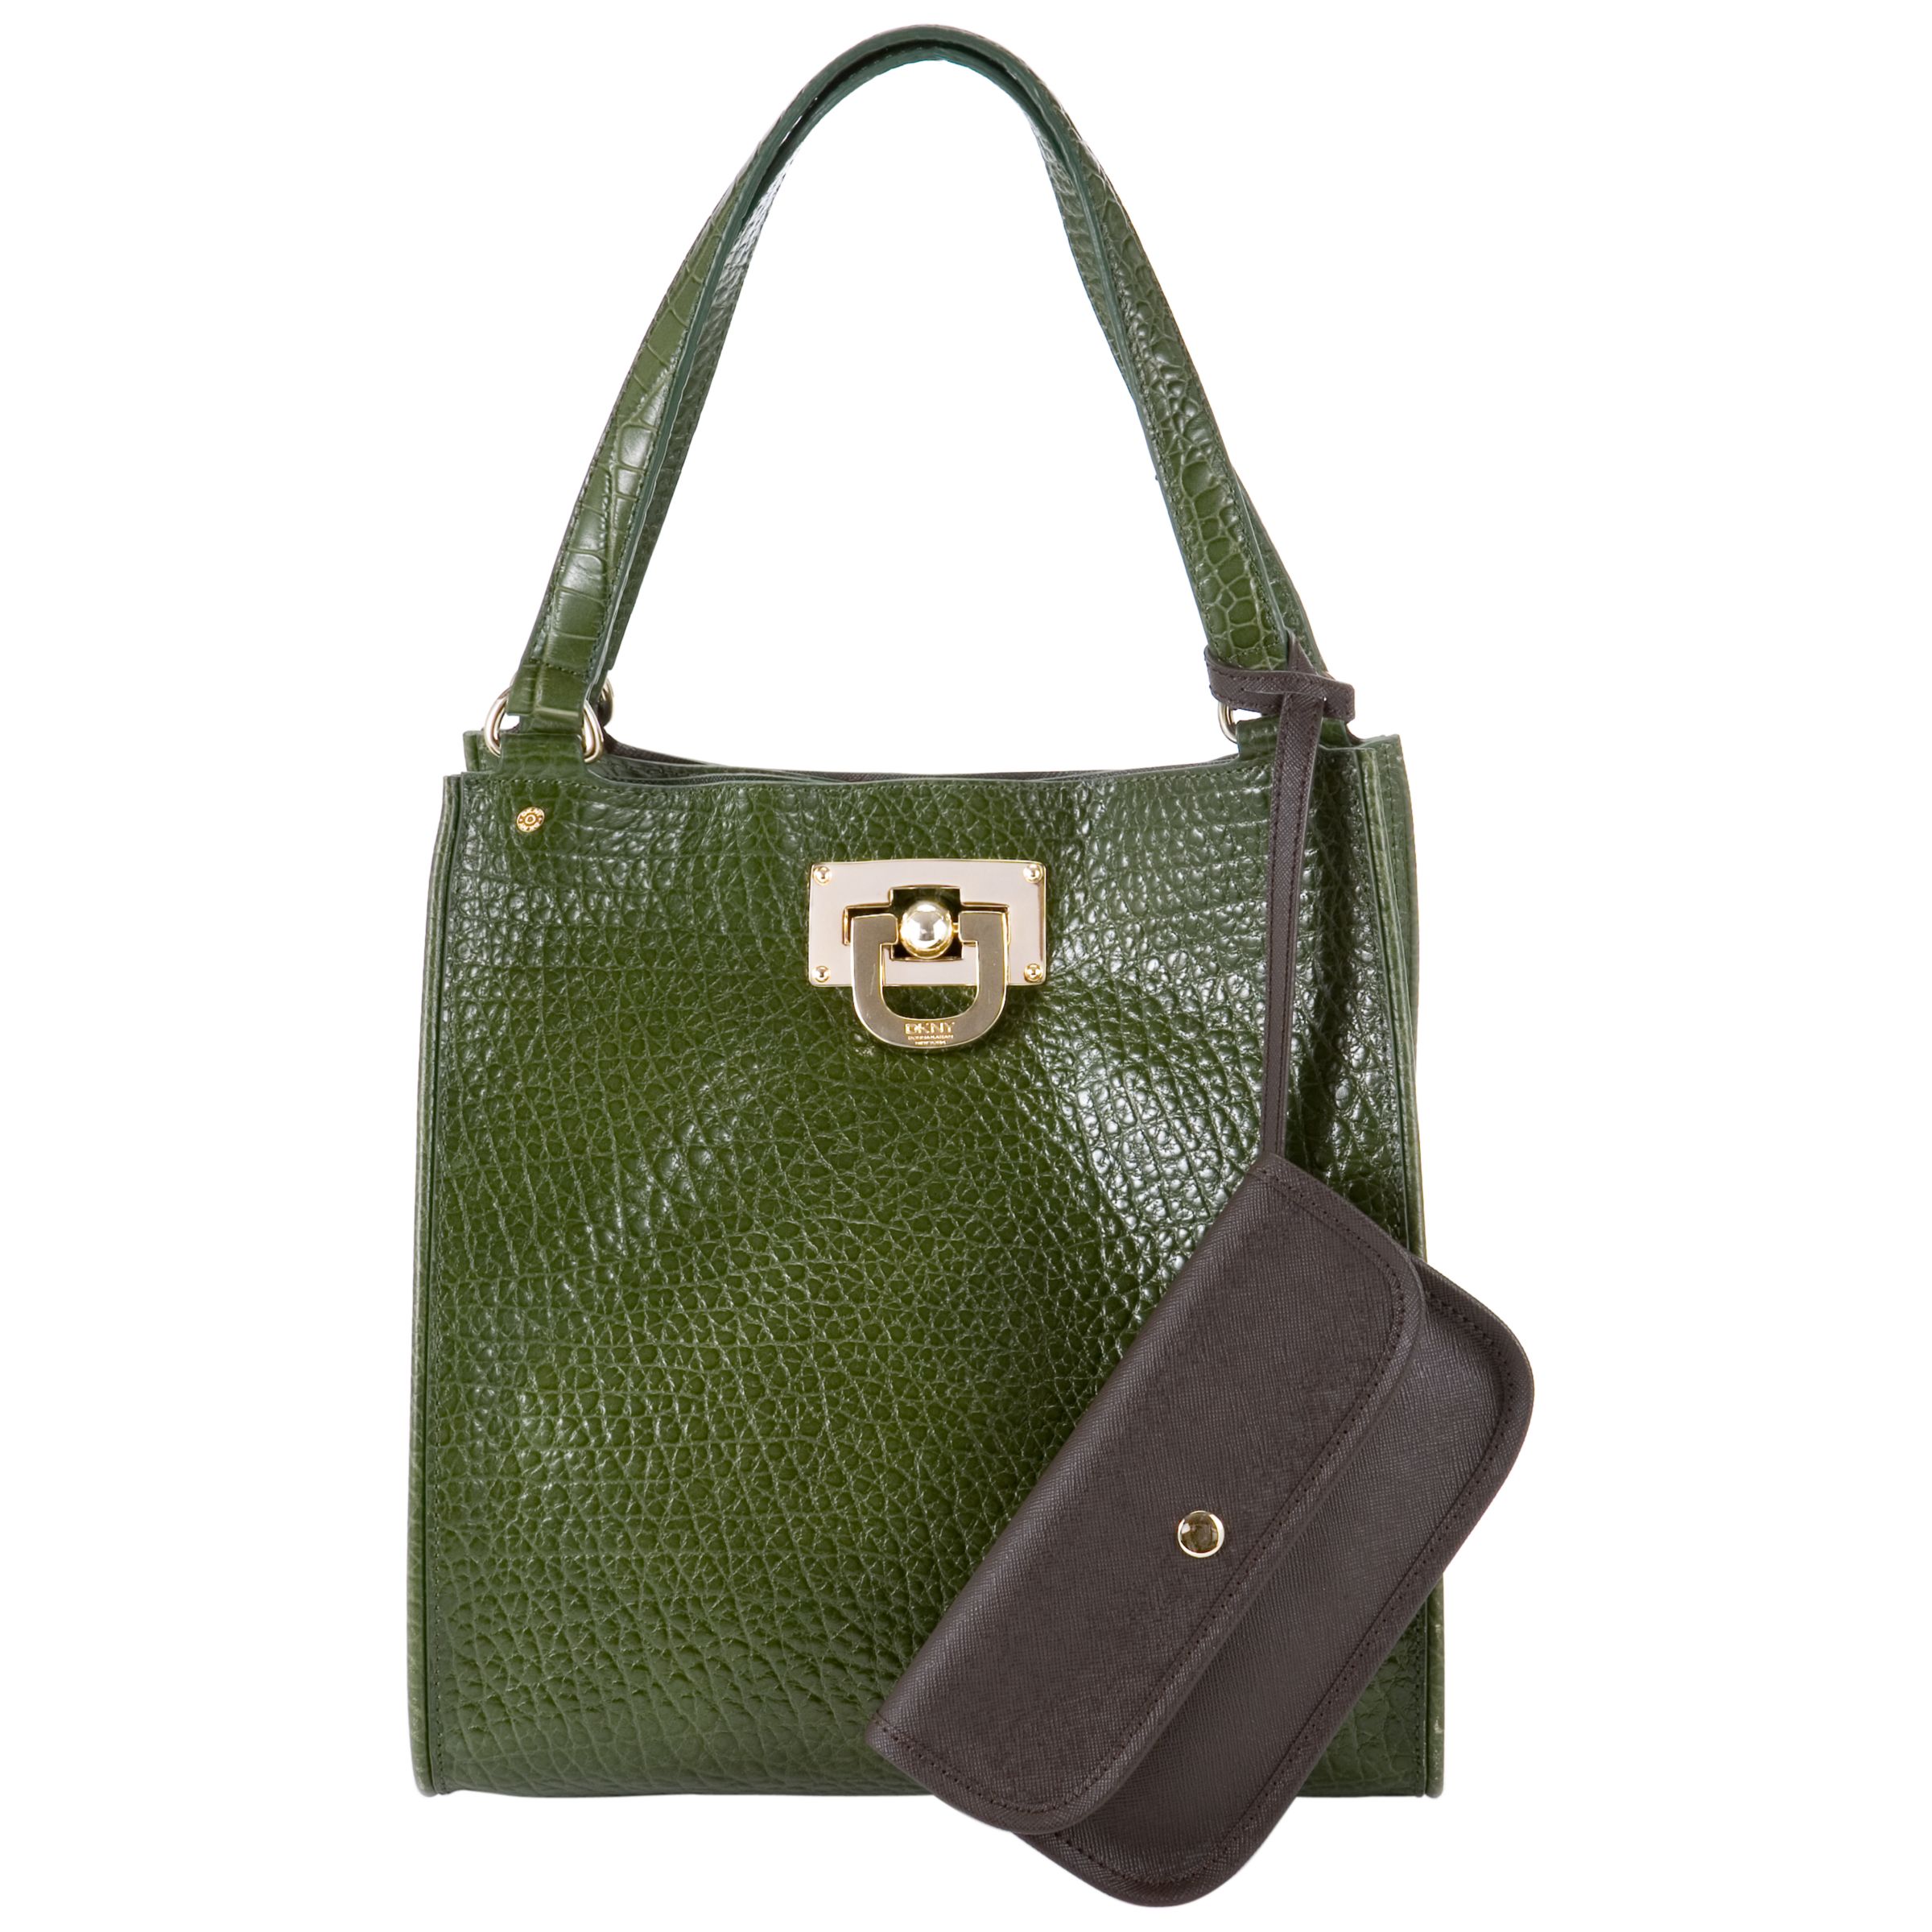 DKNY French Grain Leather Medium Shopper Bag, Green at JohnLewis